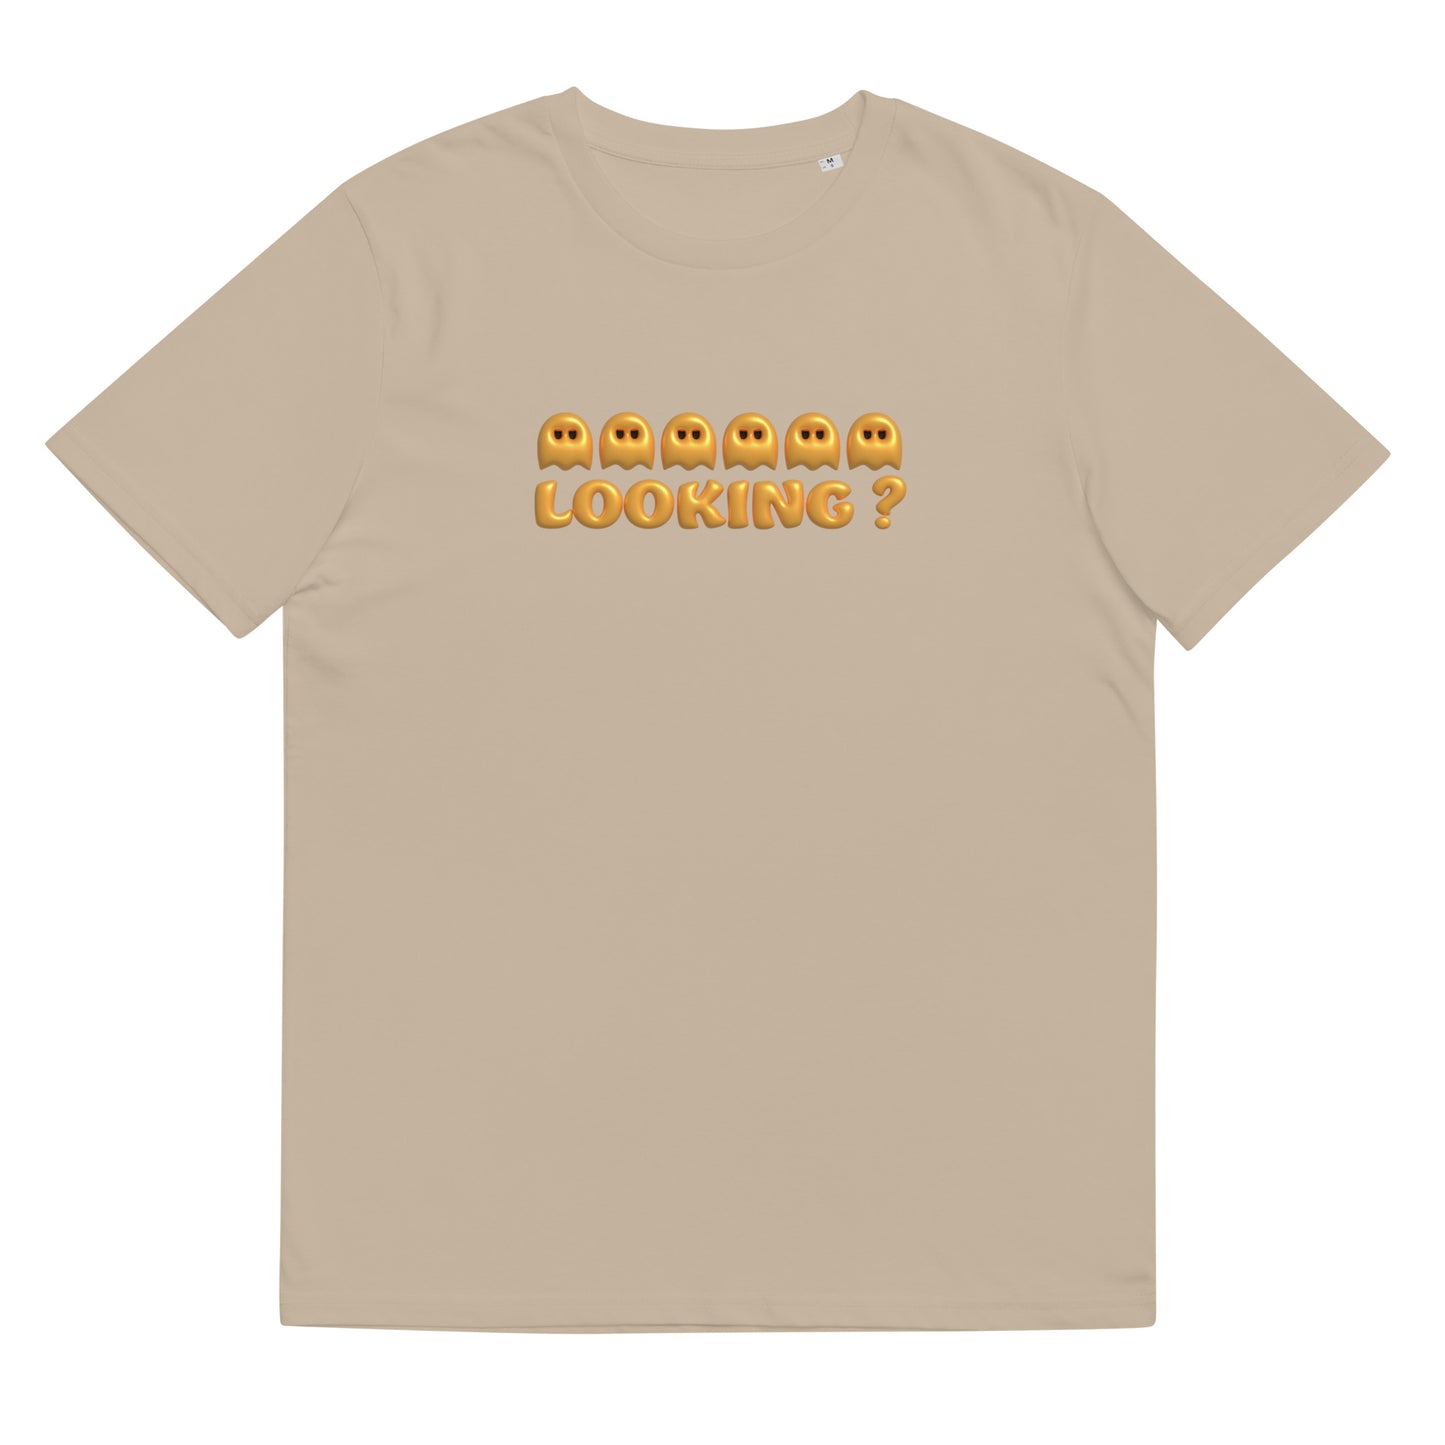 Organic Cotton T-shirt: Looking? Graphic Print